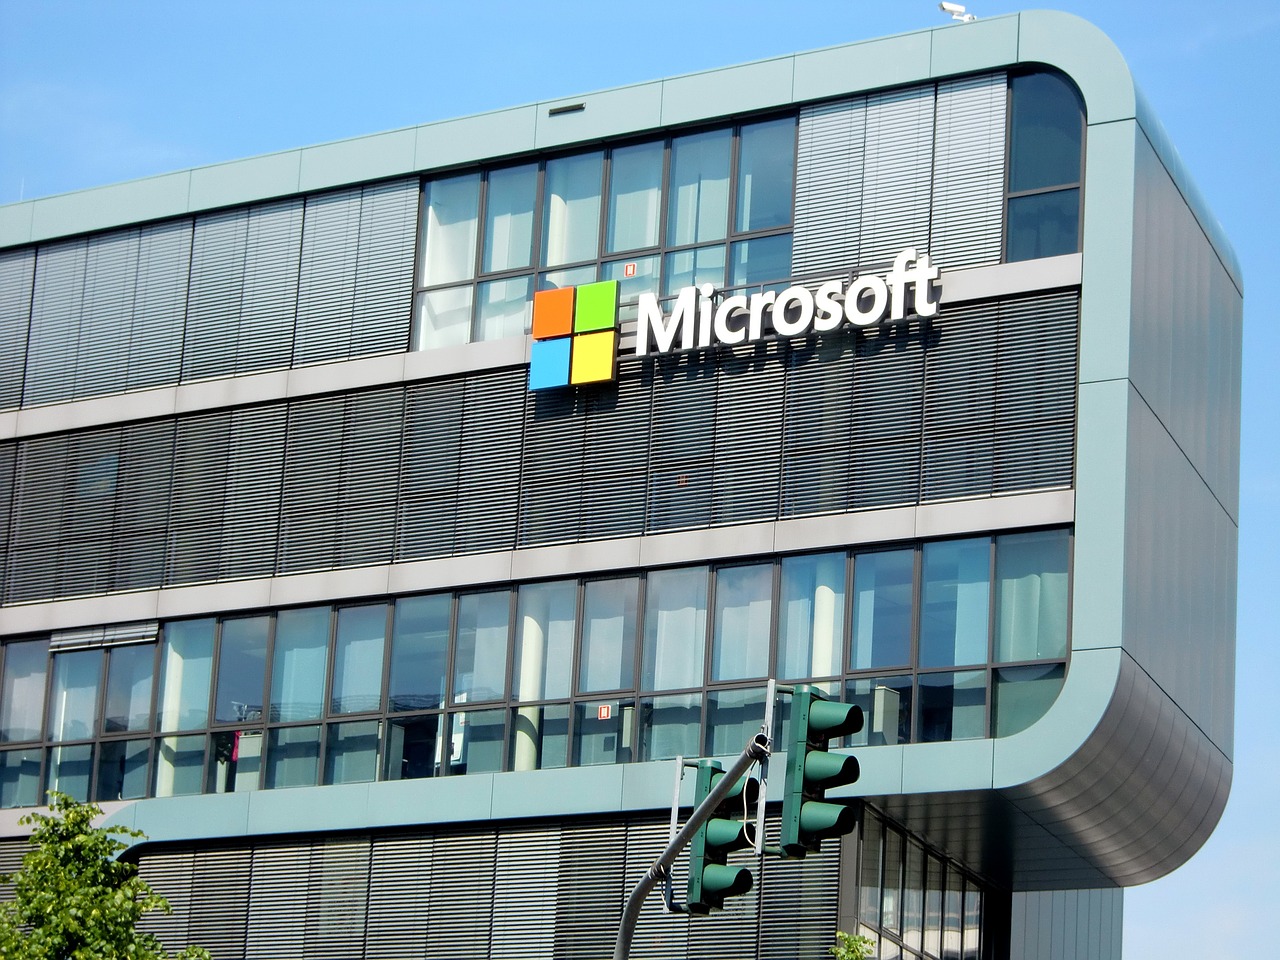 More information about "Στα Σπάτα Αττικής το πρώτο data center της Microsoft - Τα κτίρια και οι λοιπές υποδομές"